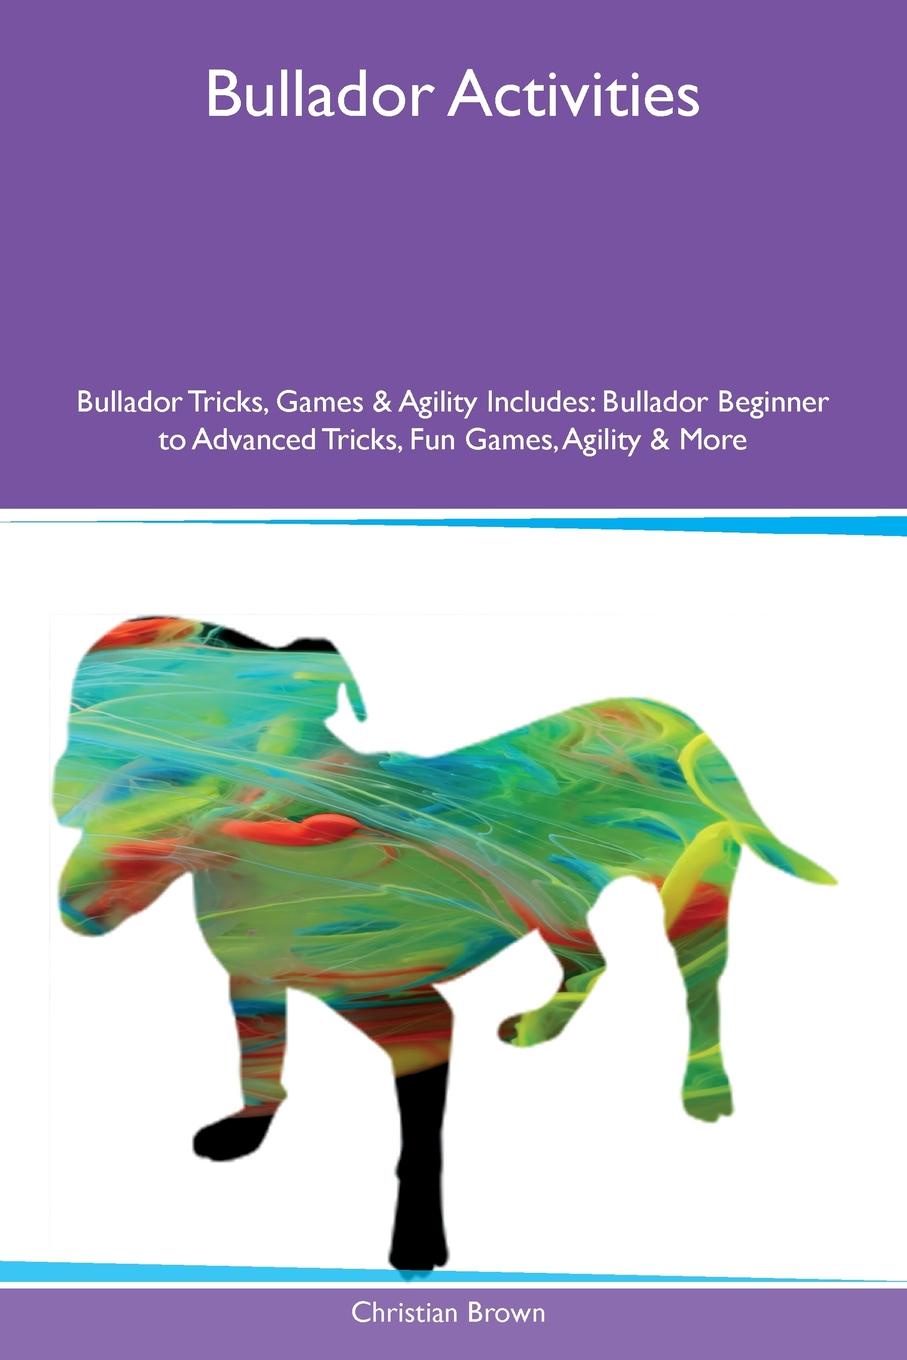 Bullador Activities Bullador Tricks, Games & Agility Includes. Bullador Beginner to Advanced Tricks, Fun Games, Agility & More